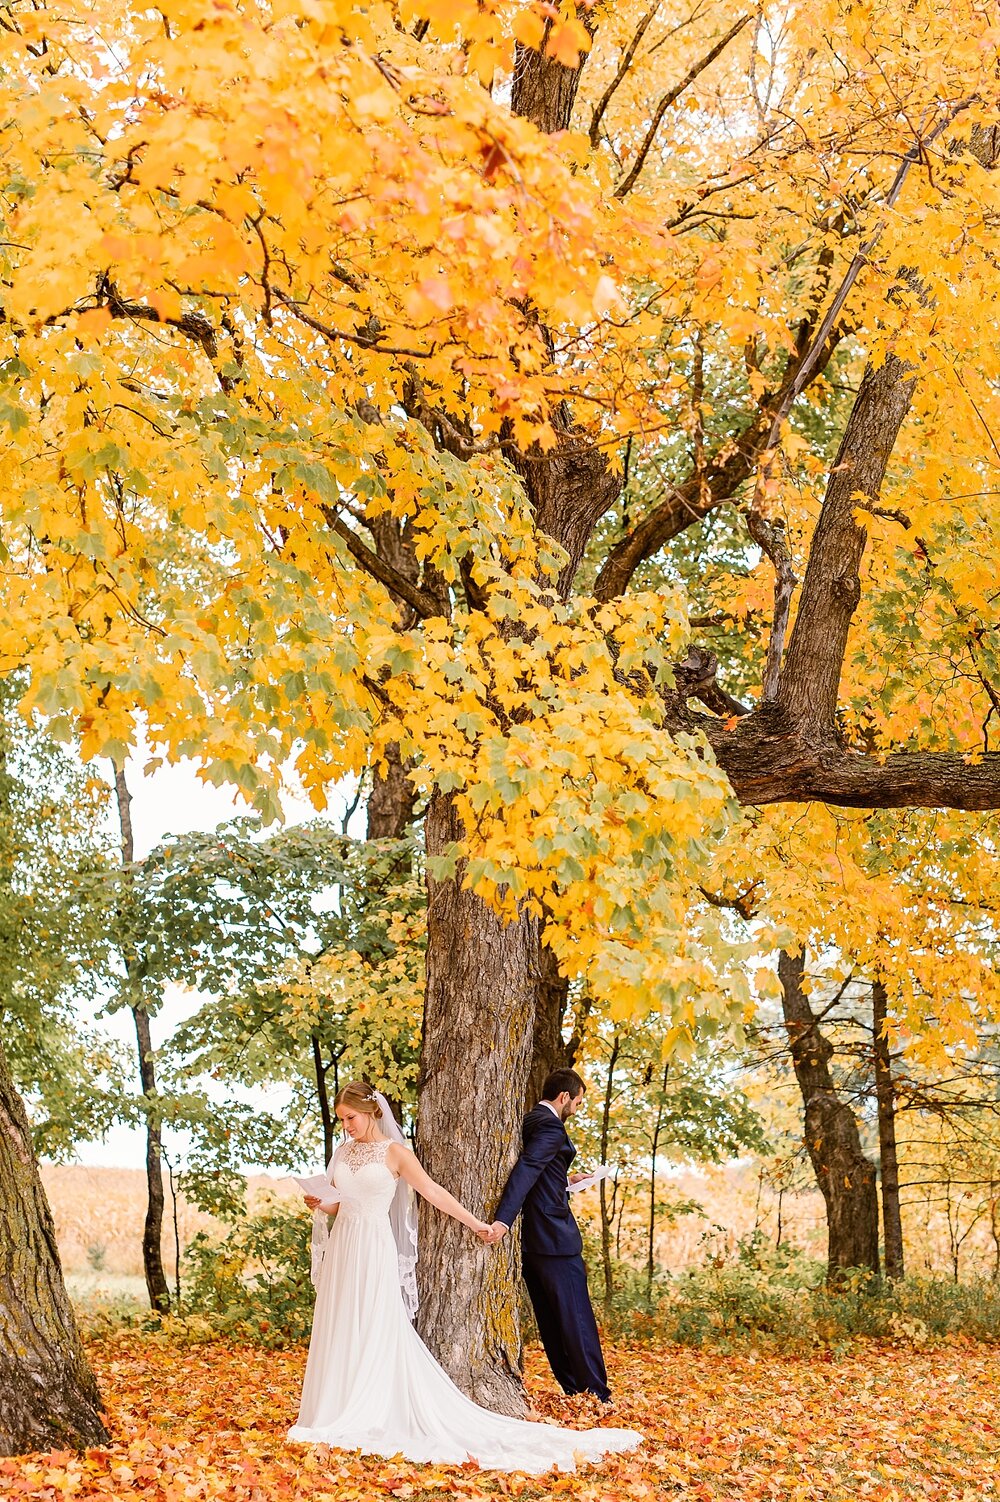 AmberLangerudPhotography_Vergas, MN Fall Wedding with burgundy and navy_0681.jpg